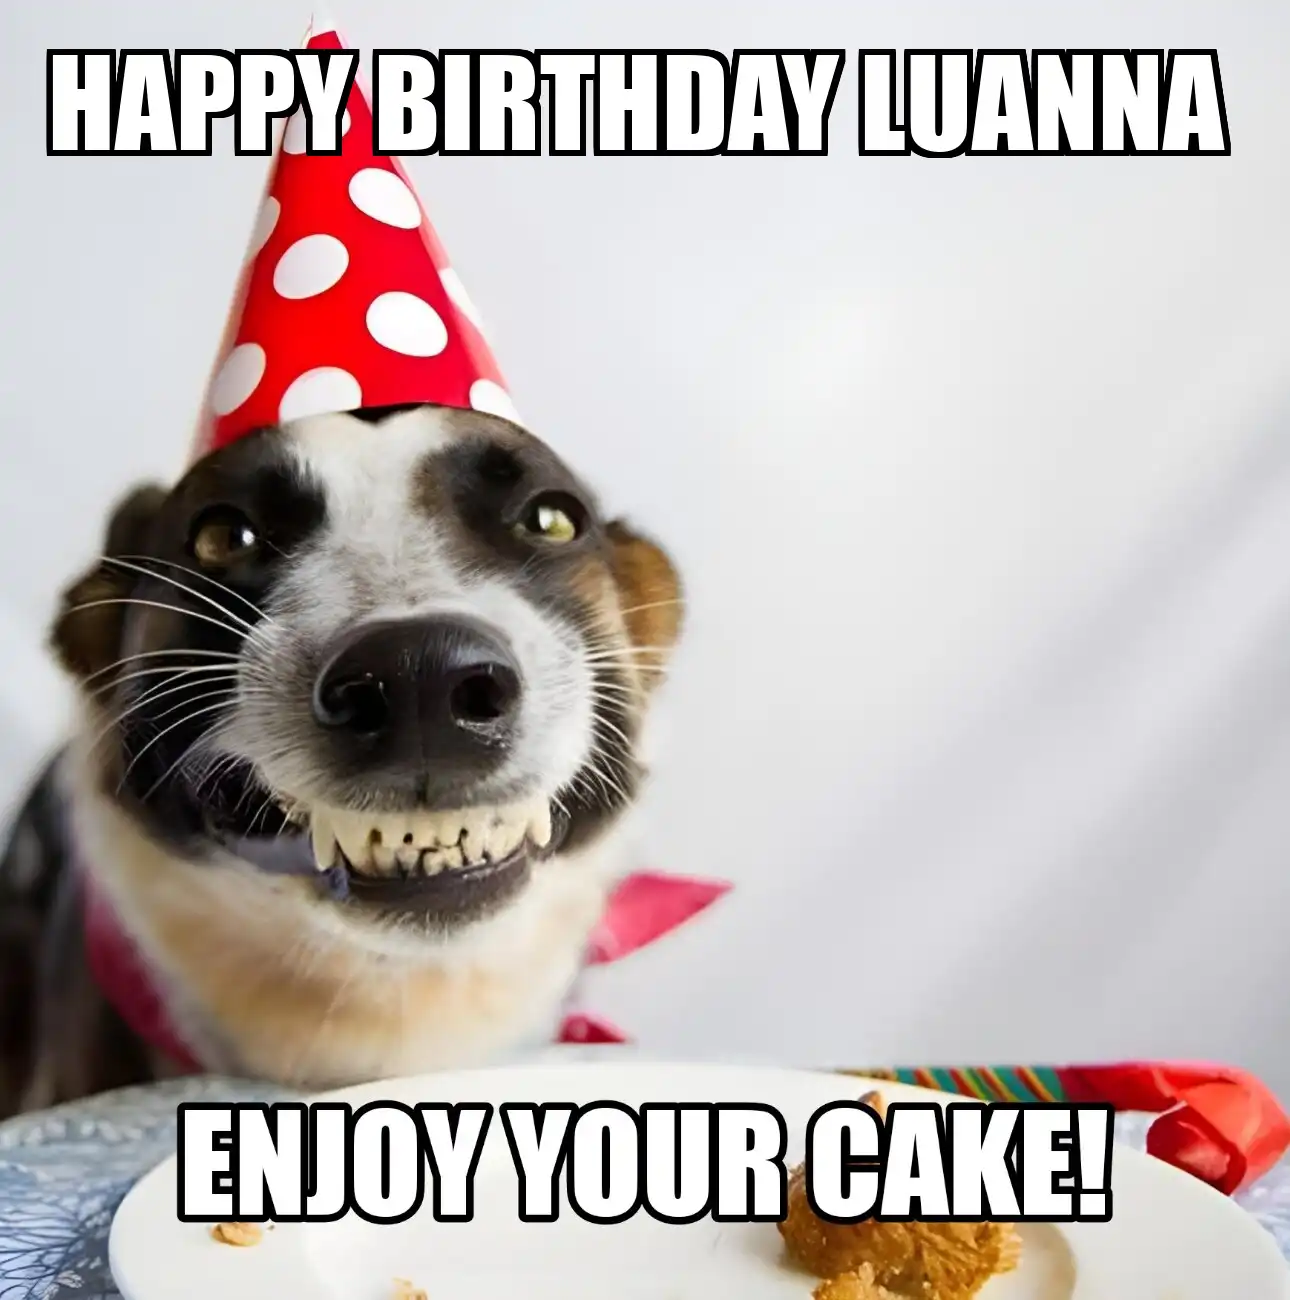 Happy Birthday Luanna Enjoy Your Cake Dog Meme